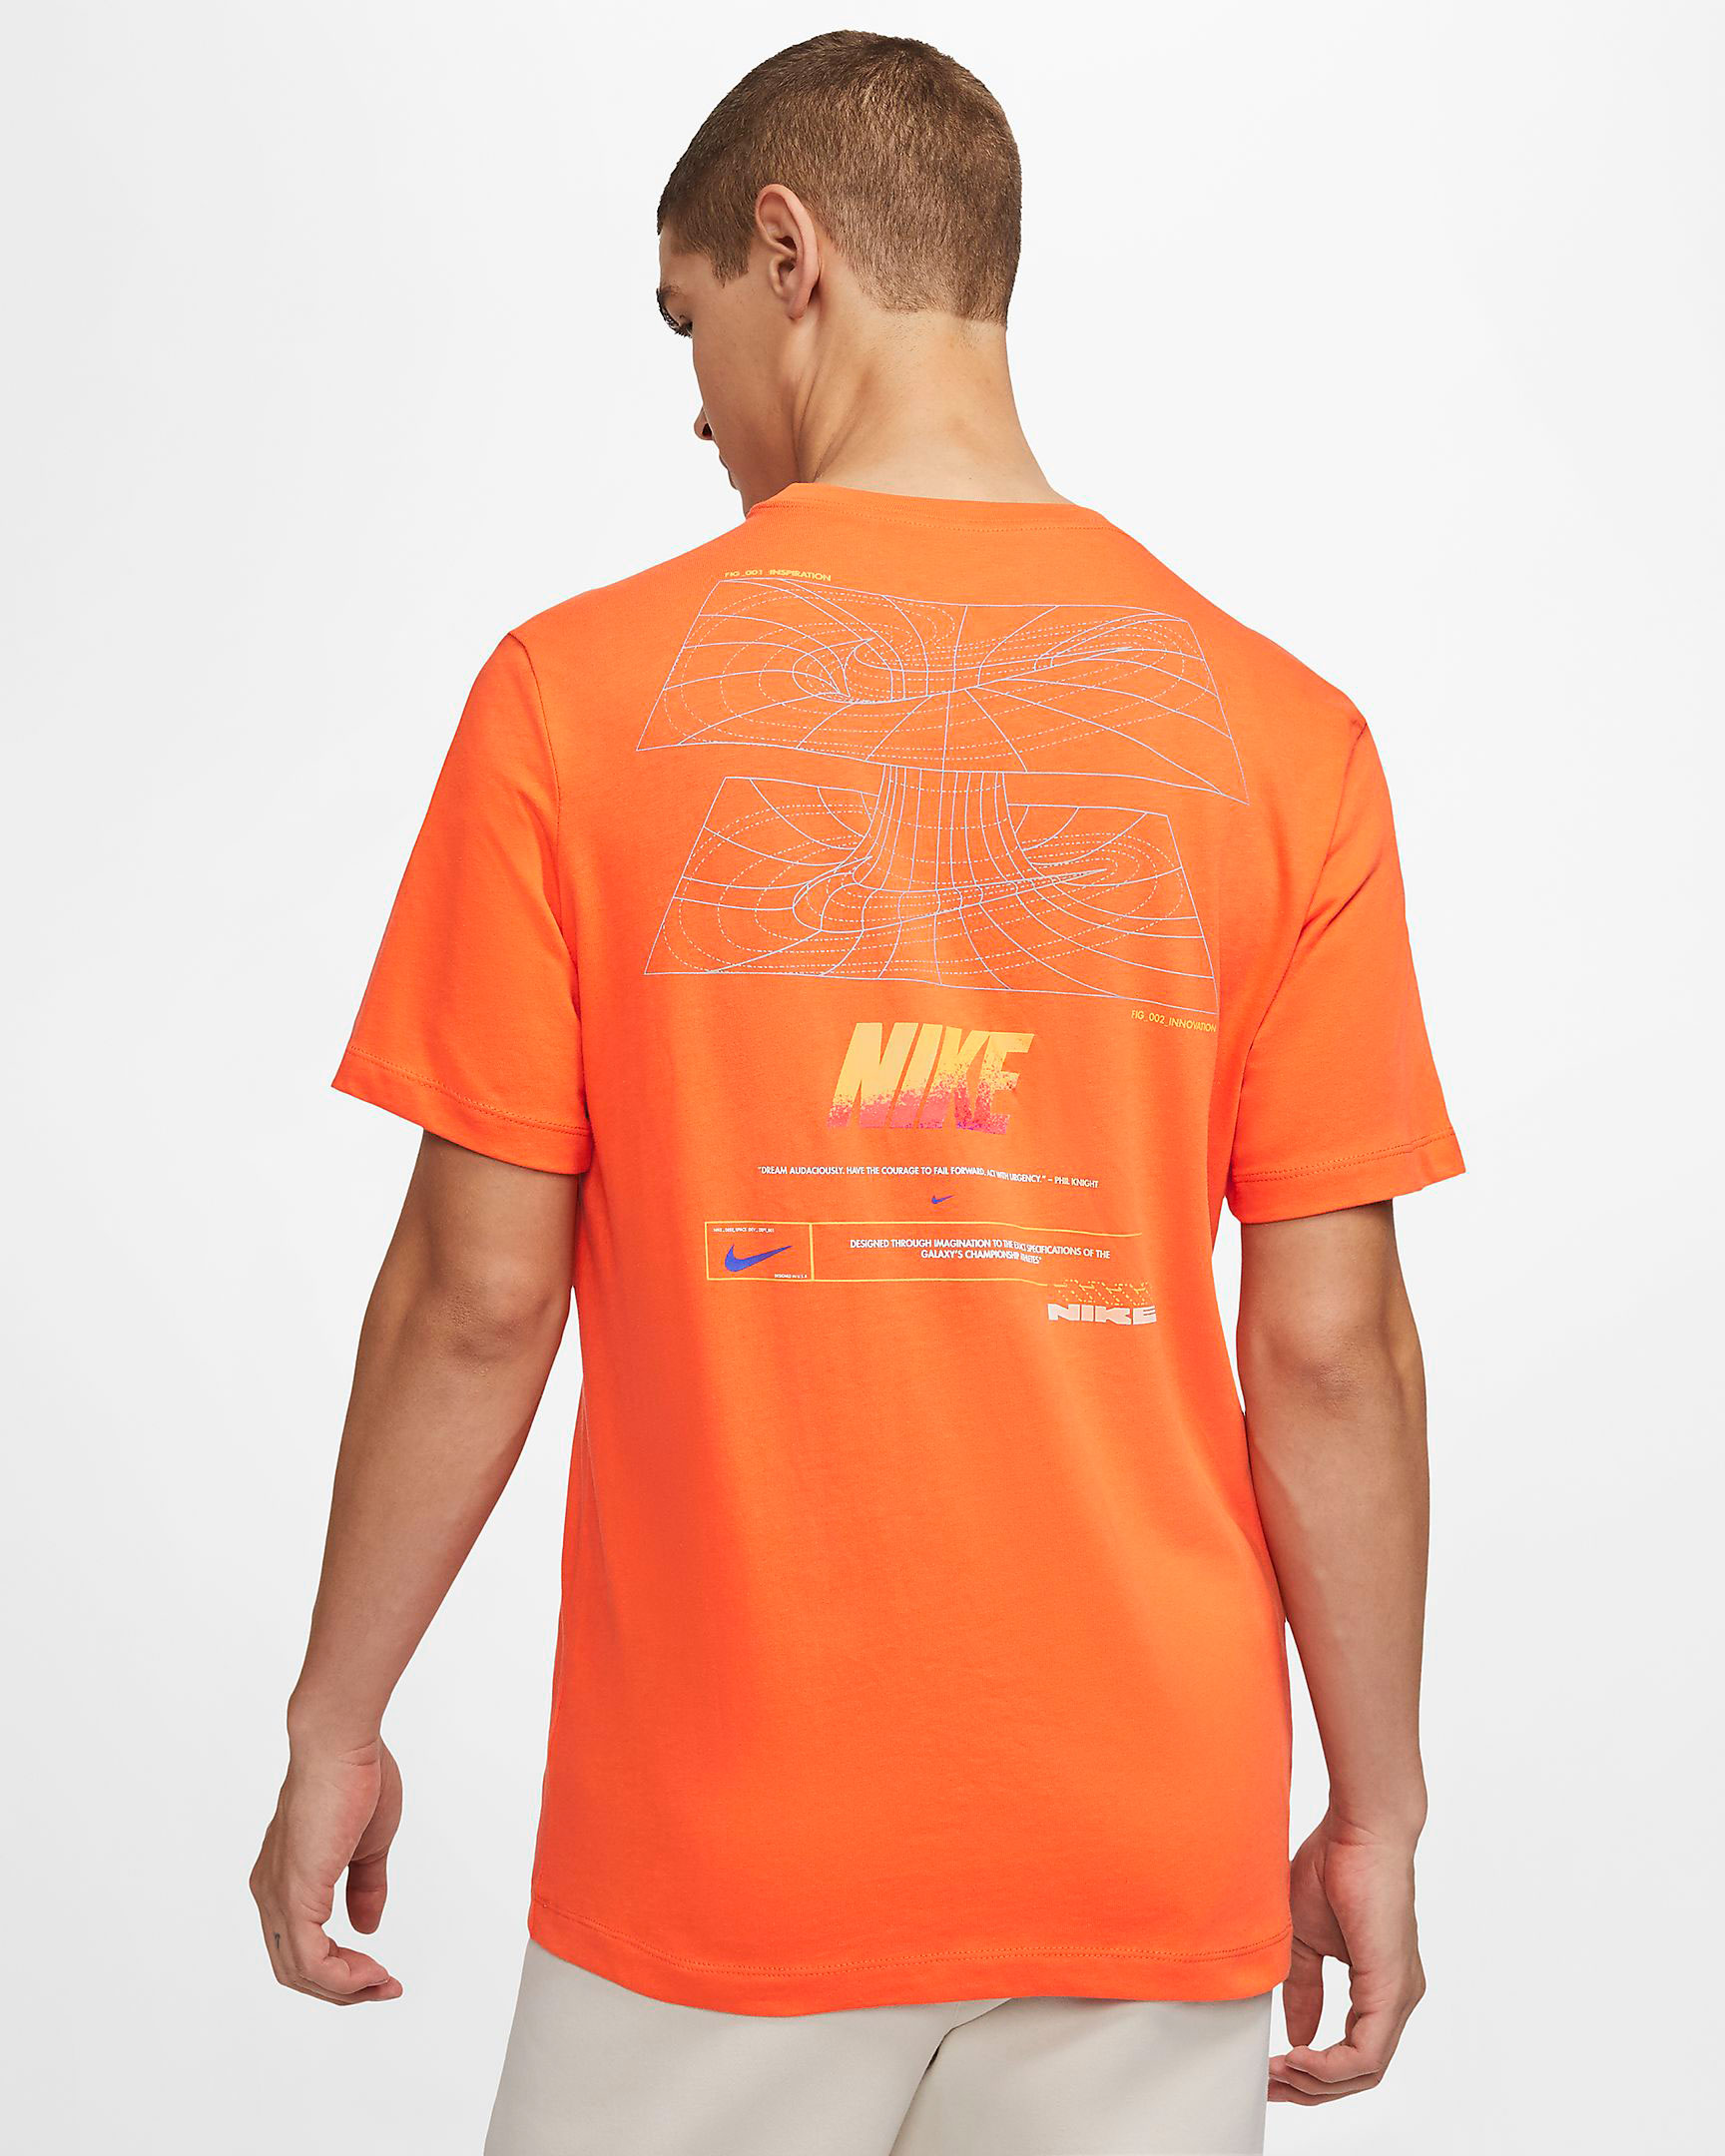 Nike Foamposite One Rugged Orange Clothing | SneakerFits.com